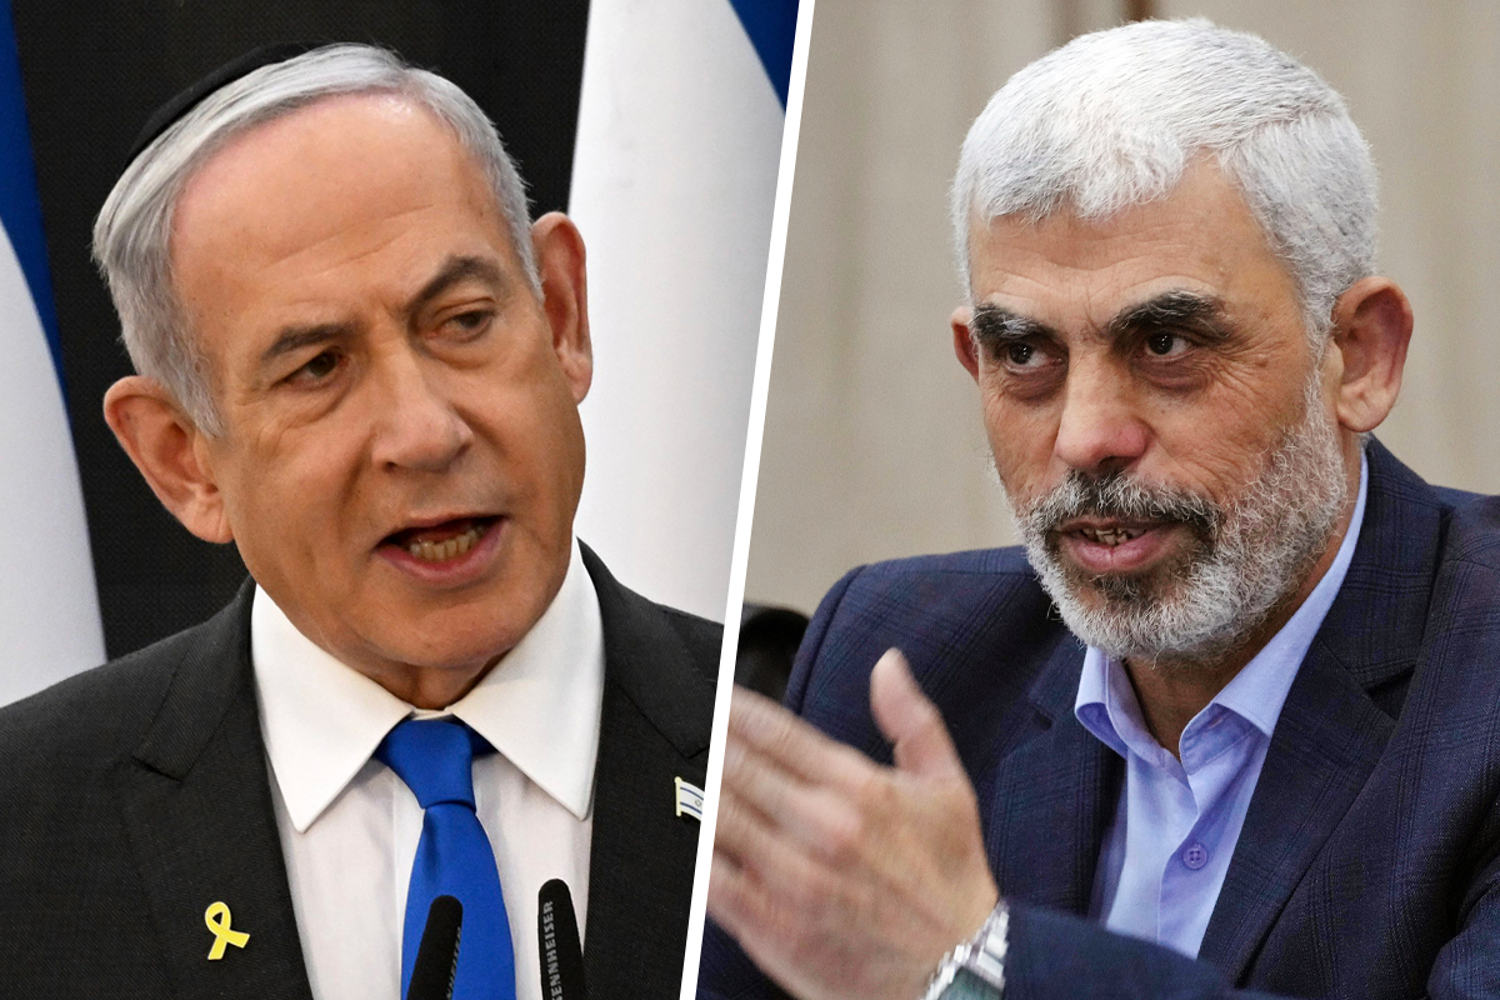 Biden says it's 'outrageous' ICC is seeking arrest warrants for Netanyahu and Israeli leaders